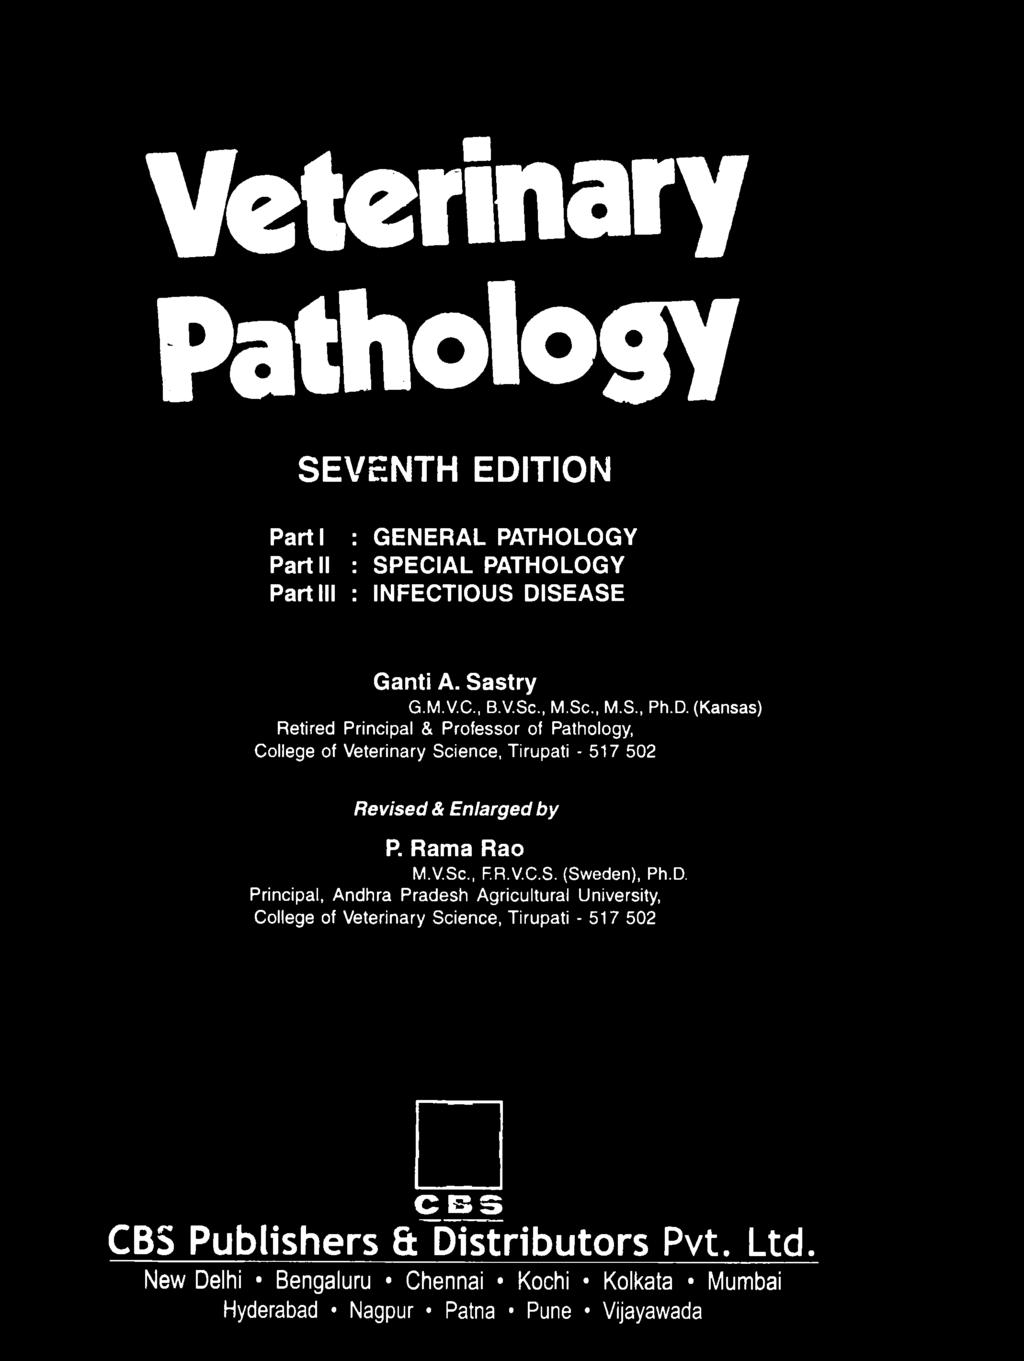 Veterinary Pathology SEVENTH EDITION Parti : GENERAL PATHOLOGY Part II : SPECIAL PATHOLOGY Part III : INFECTIOUS DISEASE Ganti A. Sastry G.M.V.C., B.V.Sc., M.Sc., M.S., Ph.D. (Kansas) Retired Principal & Professor of Pathology, College of Veterinary Science, Tirupati - 517 502 Revised & Enlarged by P.